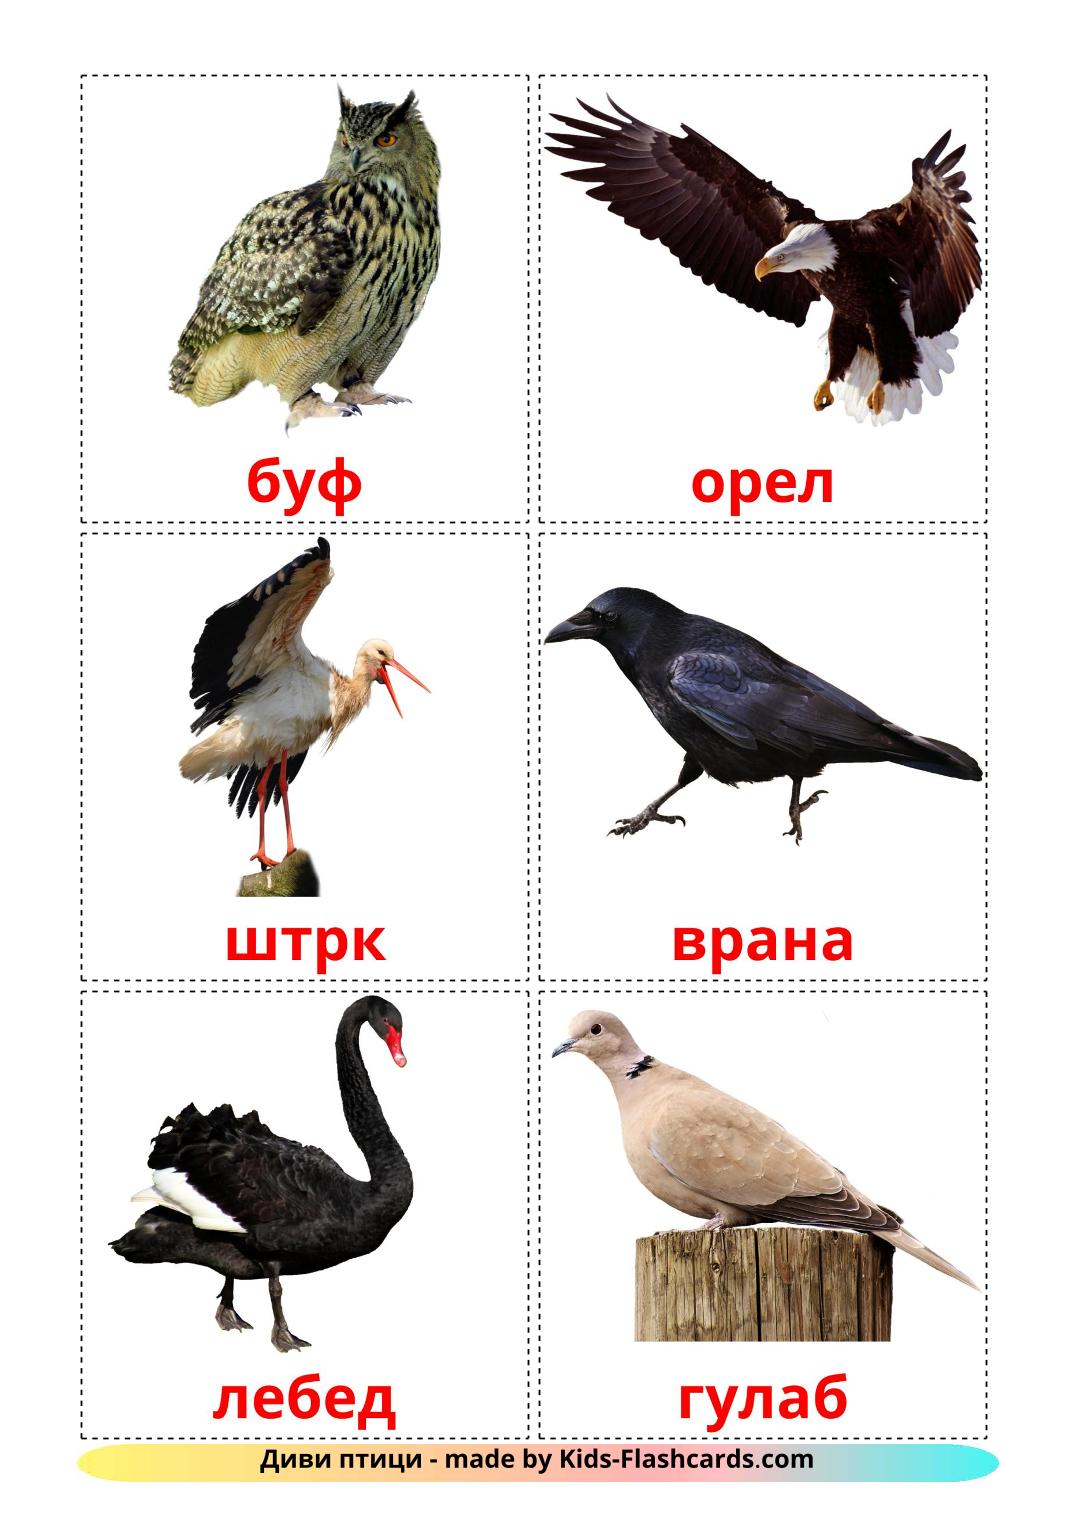 Pájaros salvajes - 18 fichas de macedonio para imprimir gratis 